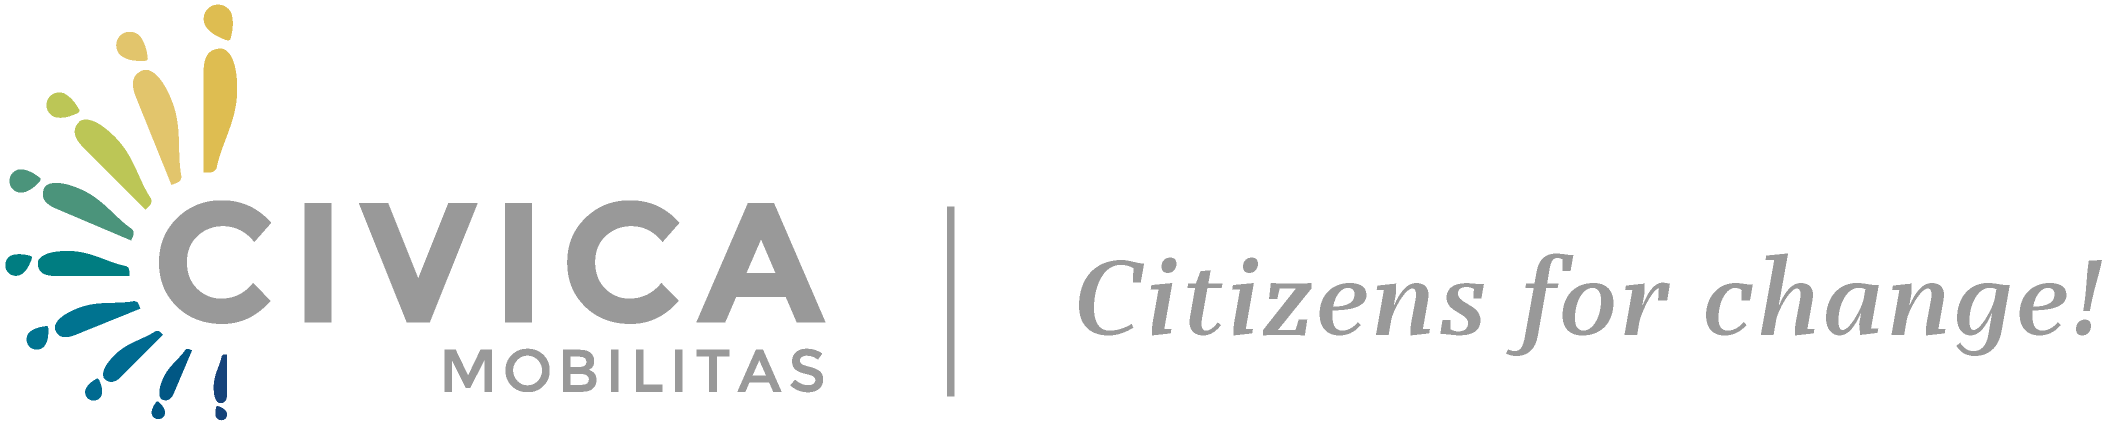 Civica Logo Clr